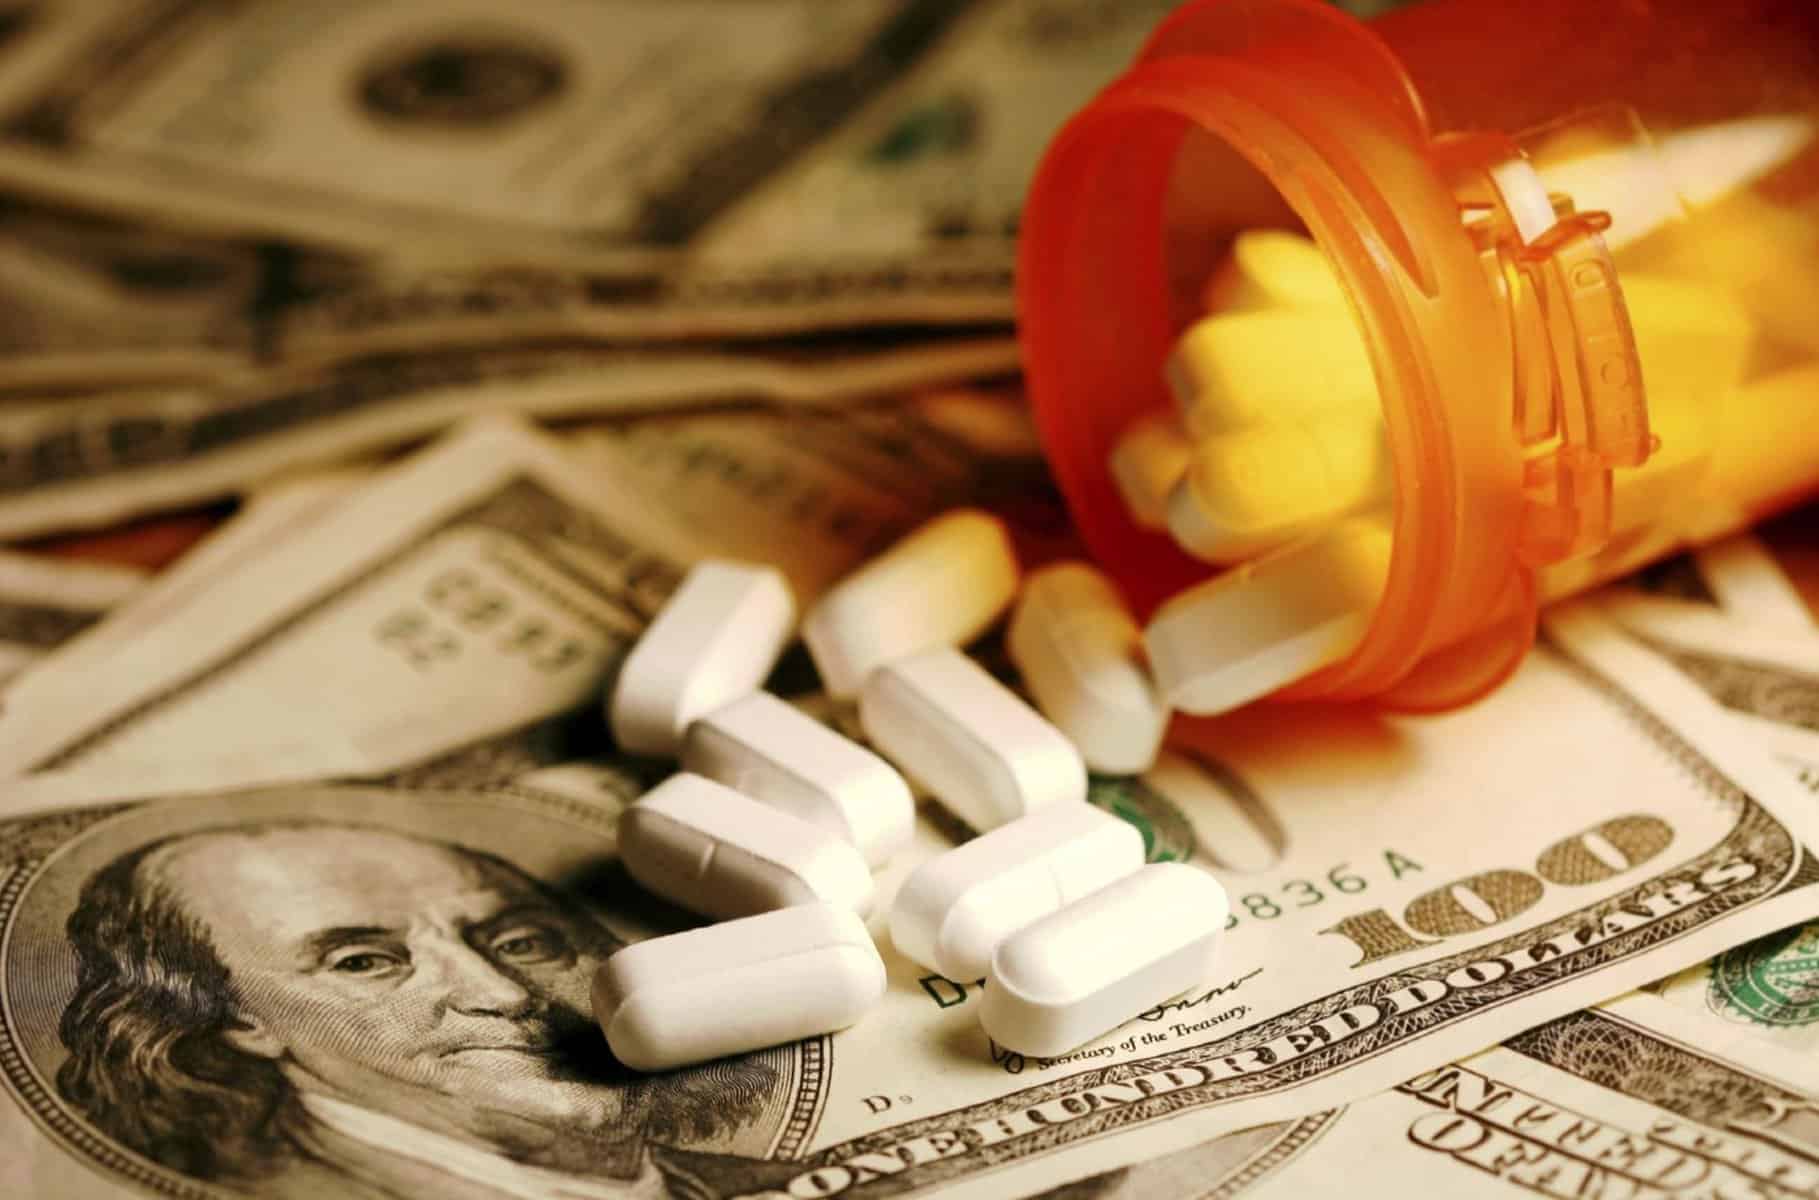 Prescription pills spilling out of a bottle onto $100 bills.